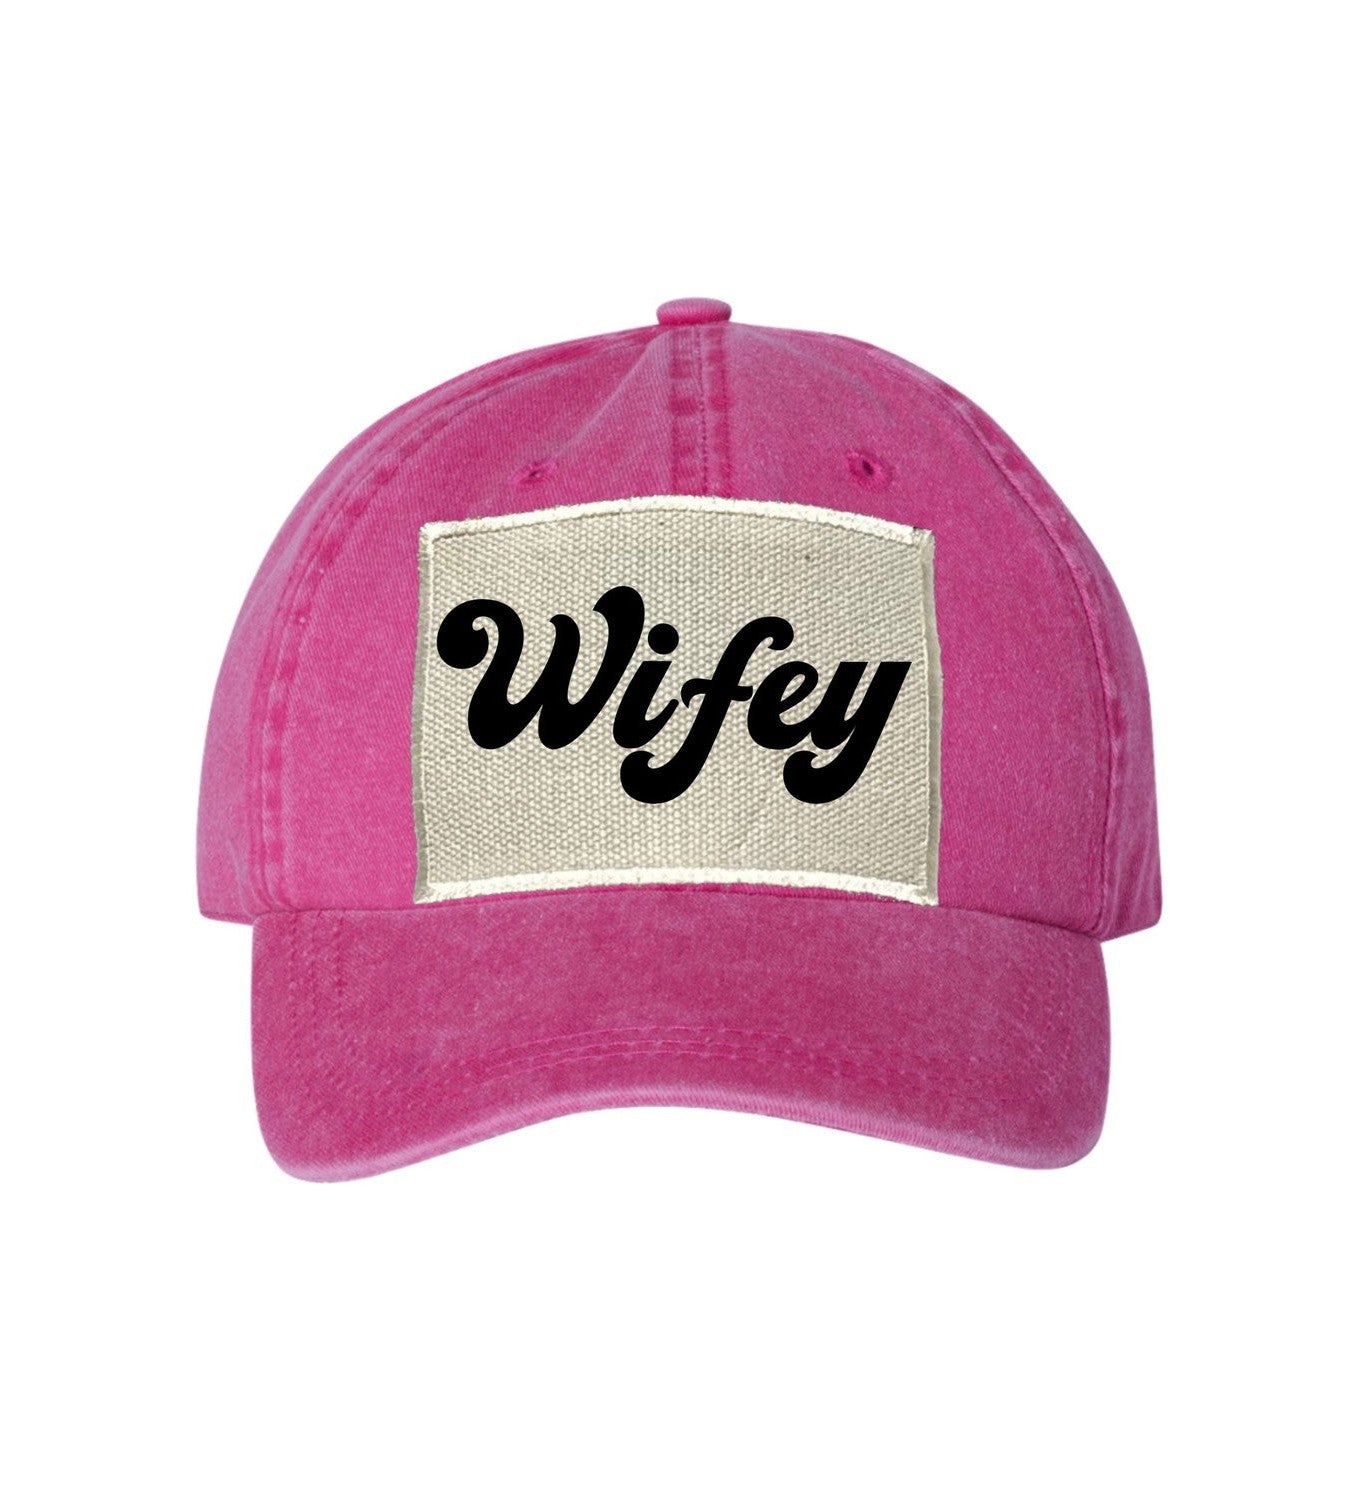 Wifey Ball Cap